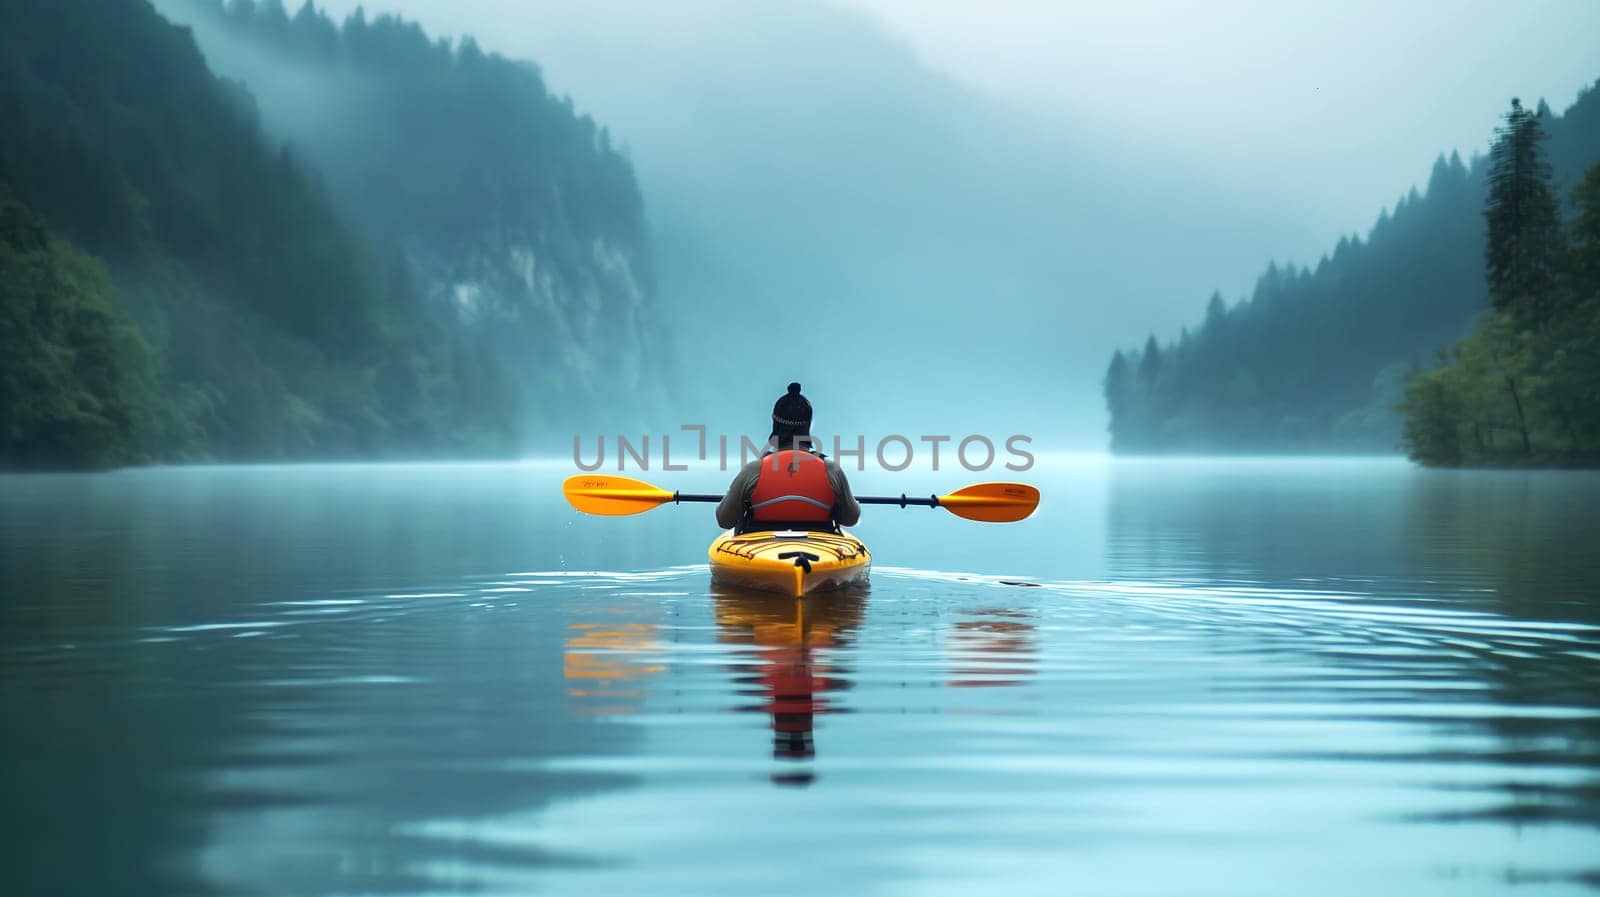 Solo Kayaker Paddling Through Misty Mountain Lake at Dawn by chrisroll